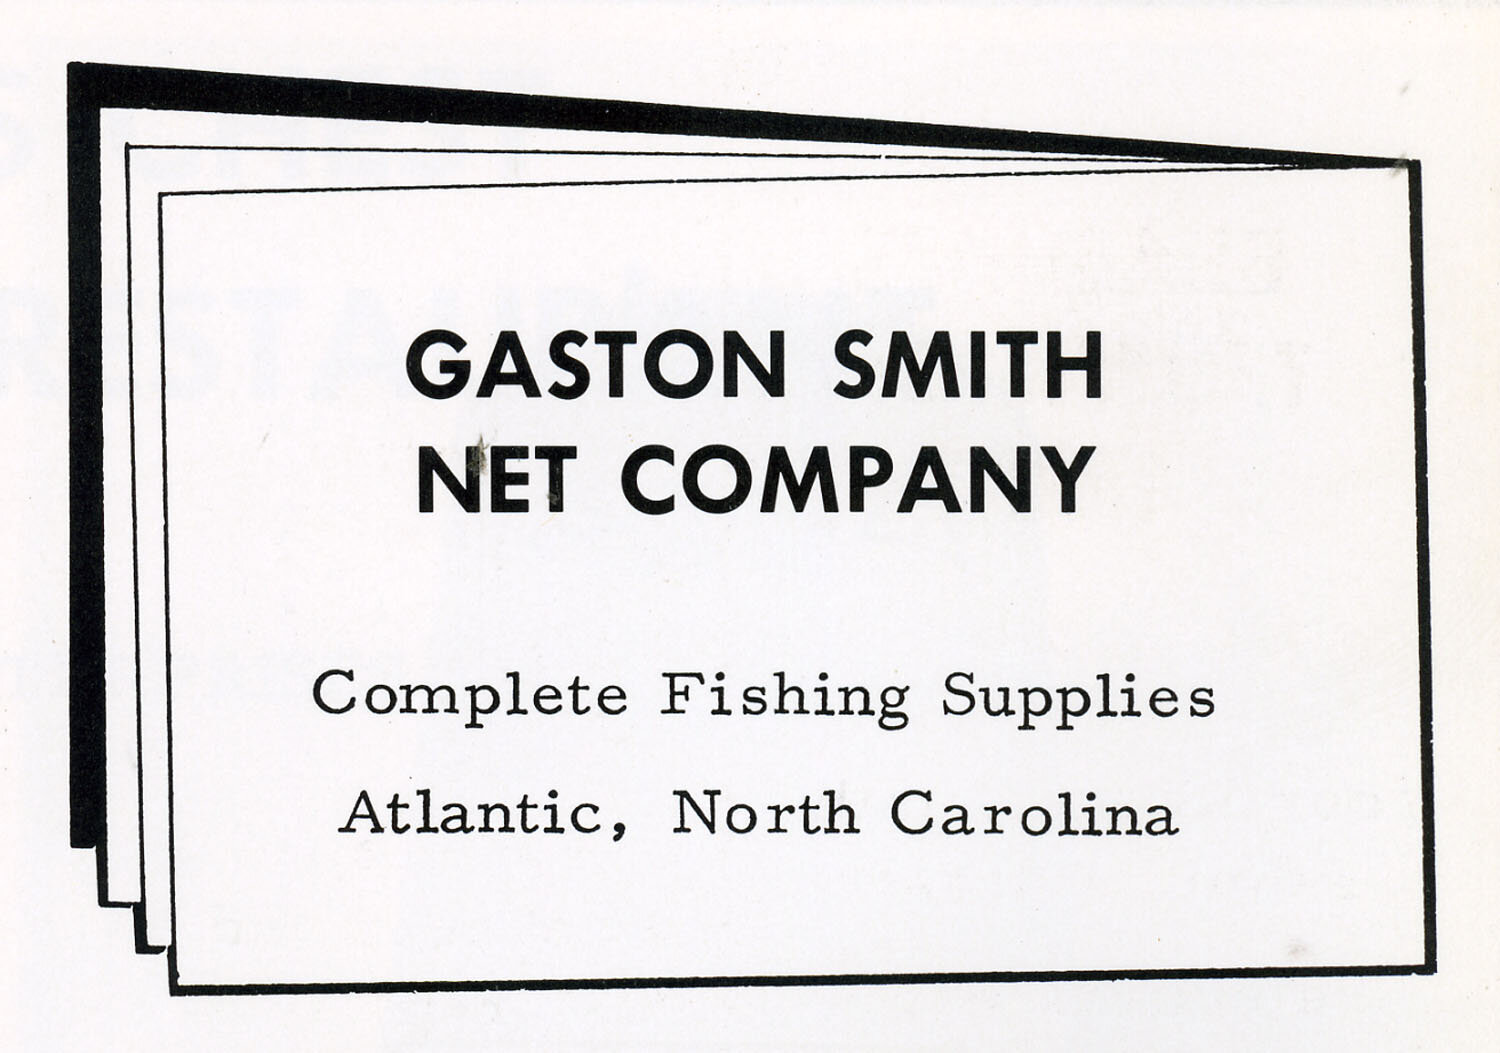 Gaston Smith Net Co ad.jpg